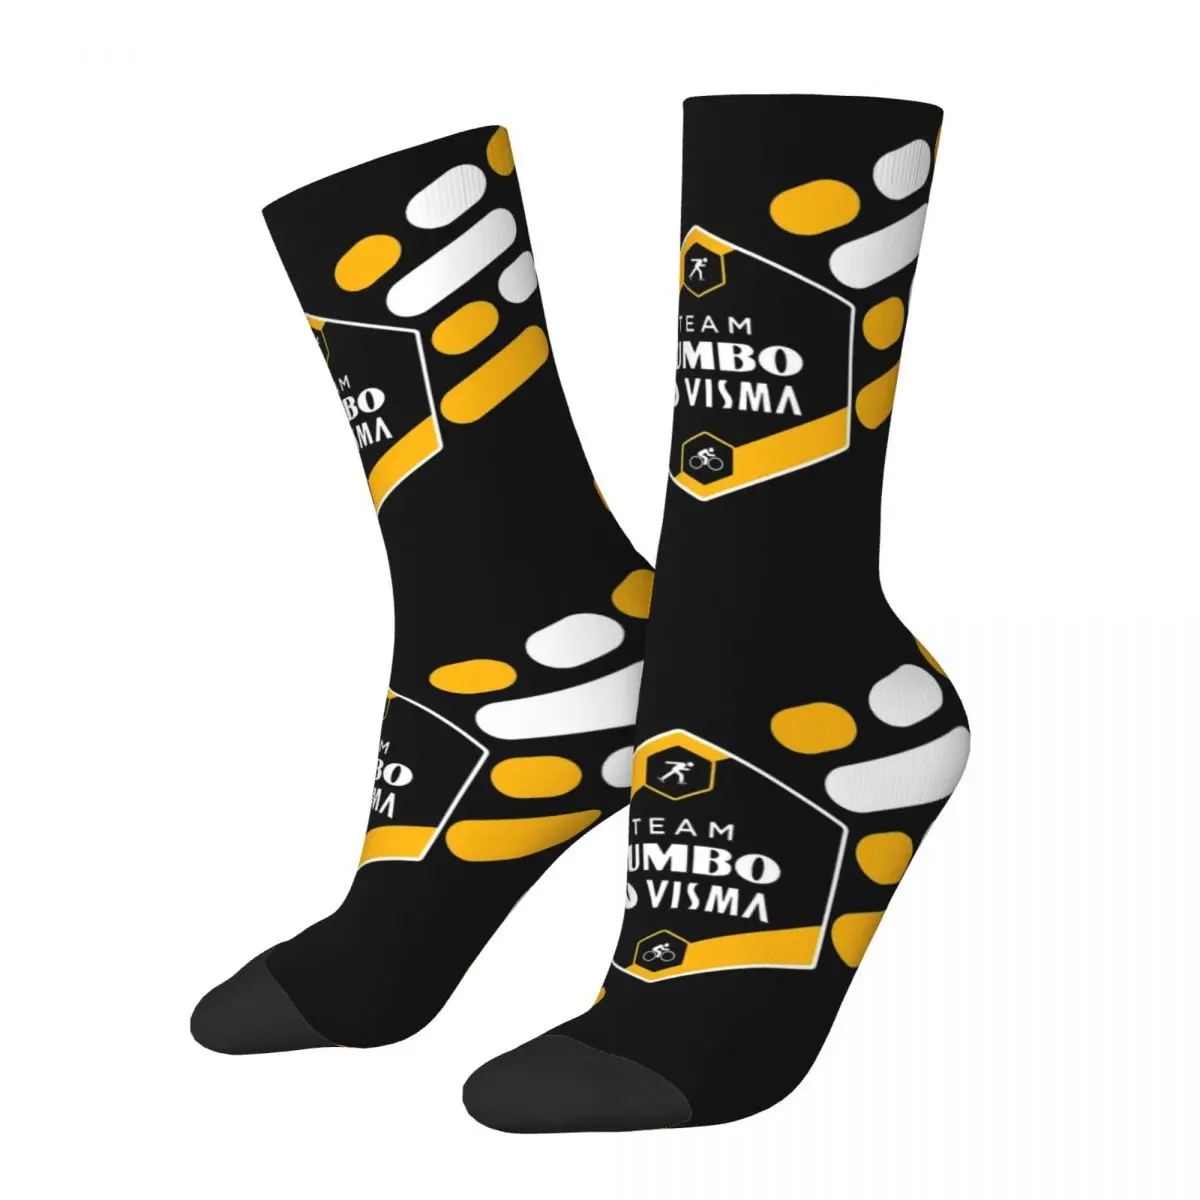 

Cool Team Jumbo Visma Pro Cycling Football Socks Uci World Tour Polyester Middle Tube Socks for Unisex Sweat Absorbing